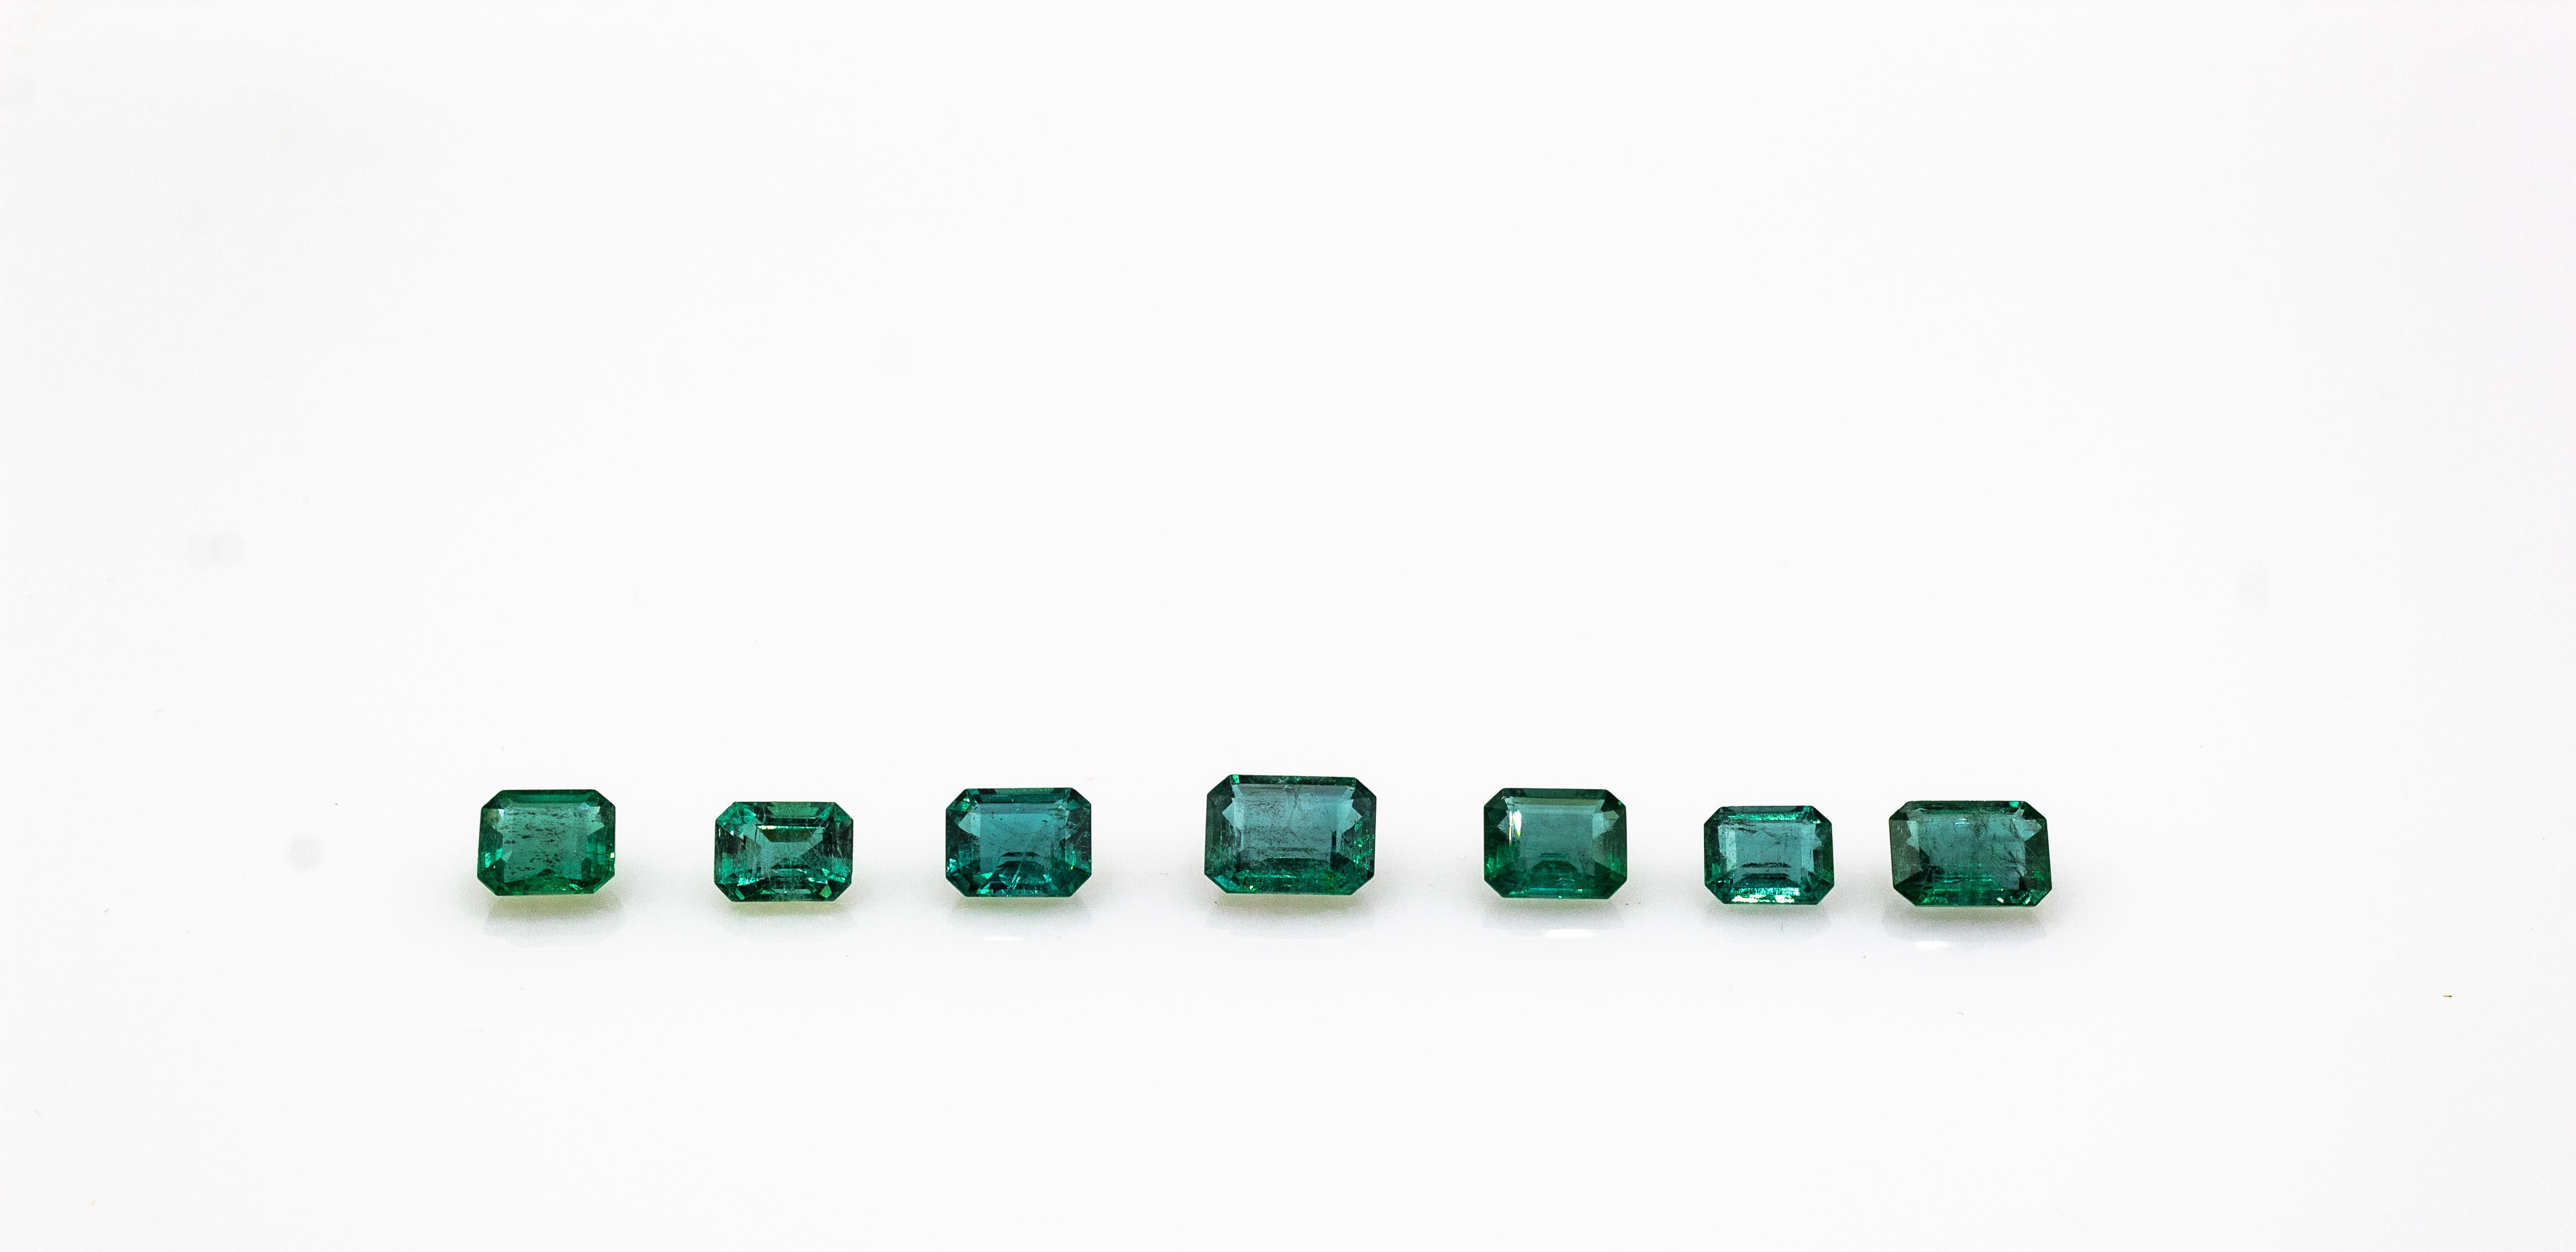 Modern Certifiable Zambia Octagon Cut 2.98 Carat Emerald Loose Gemstone